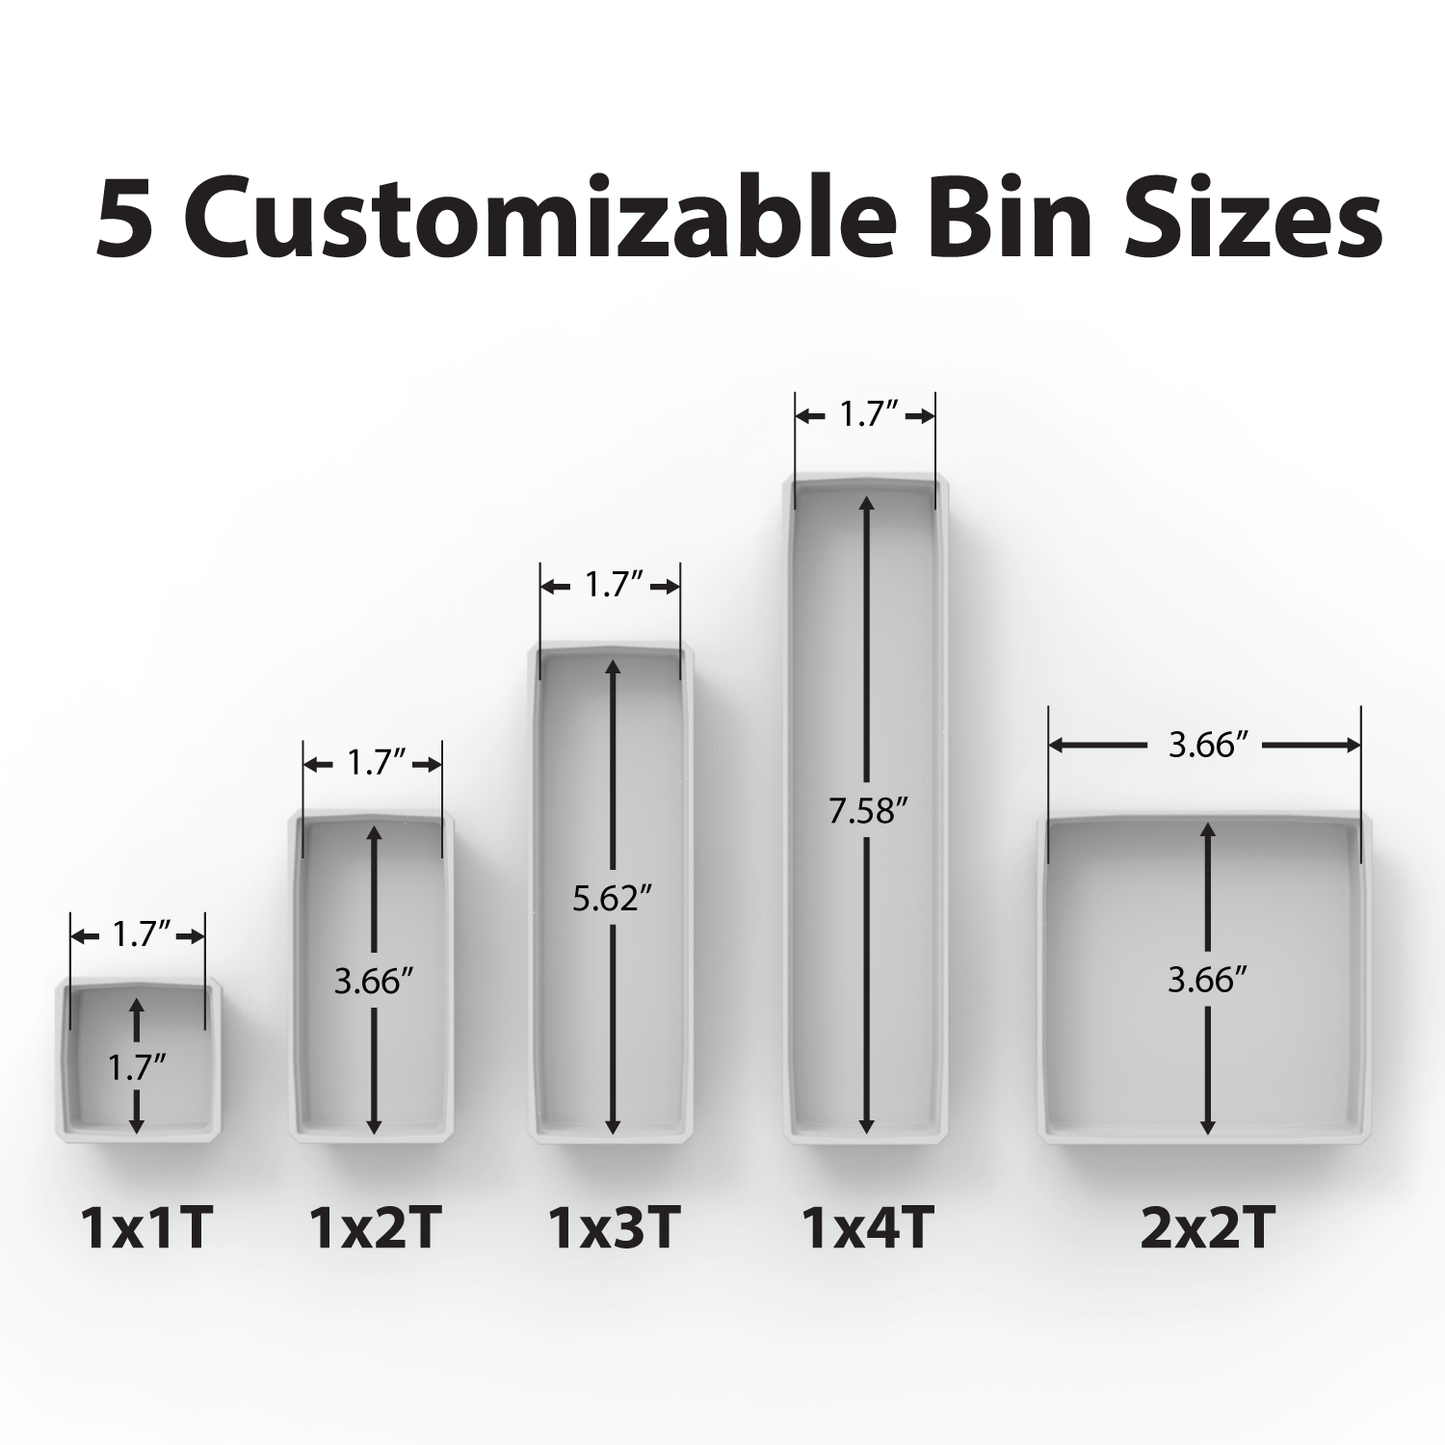 3 Customizable 1x2T (Thin) Bins